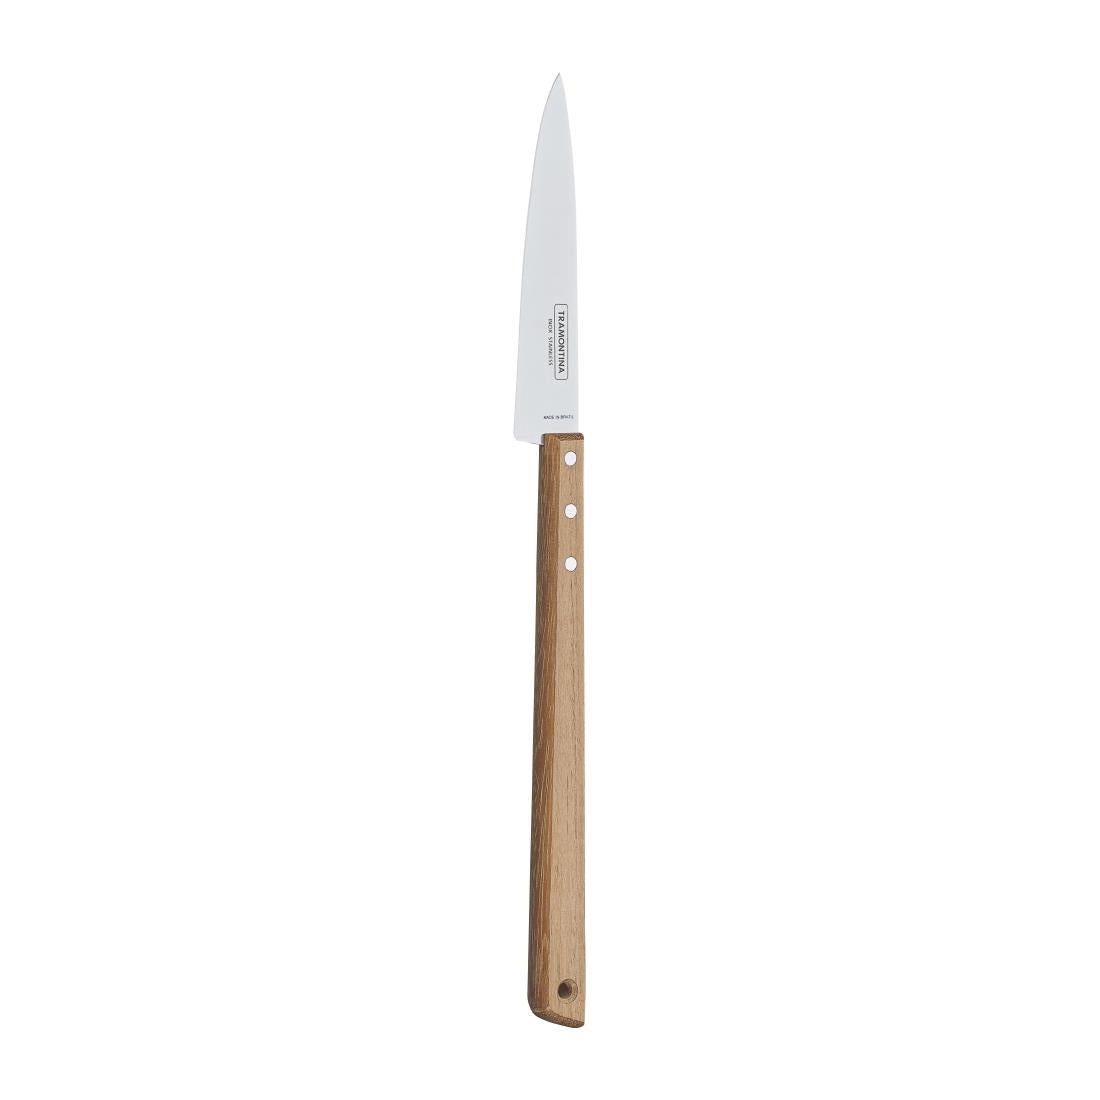 Tramontina Churrasco BBQ Carving Knife 7"